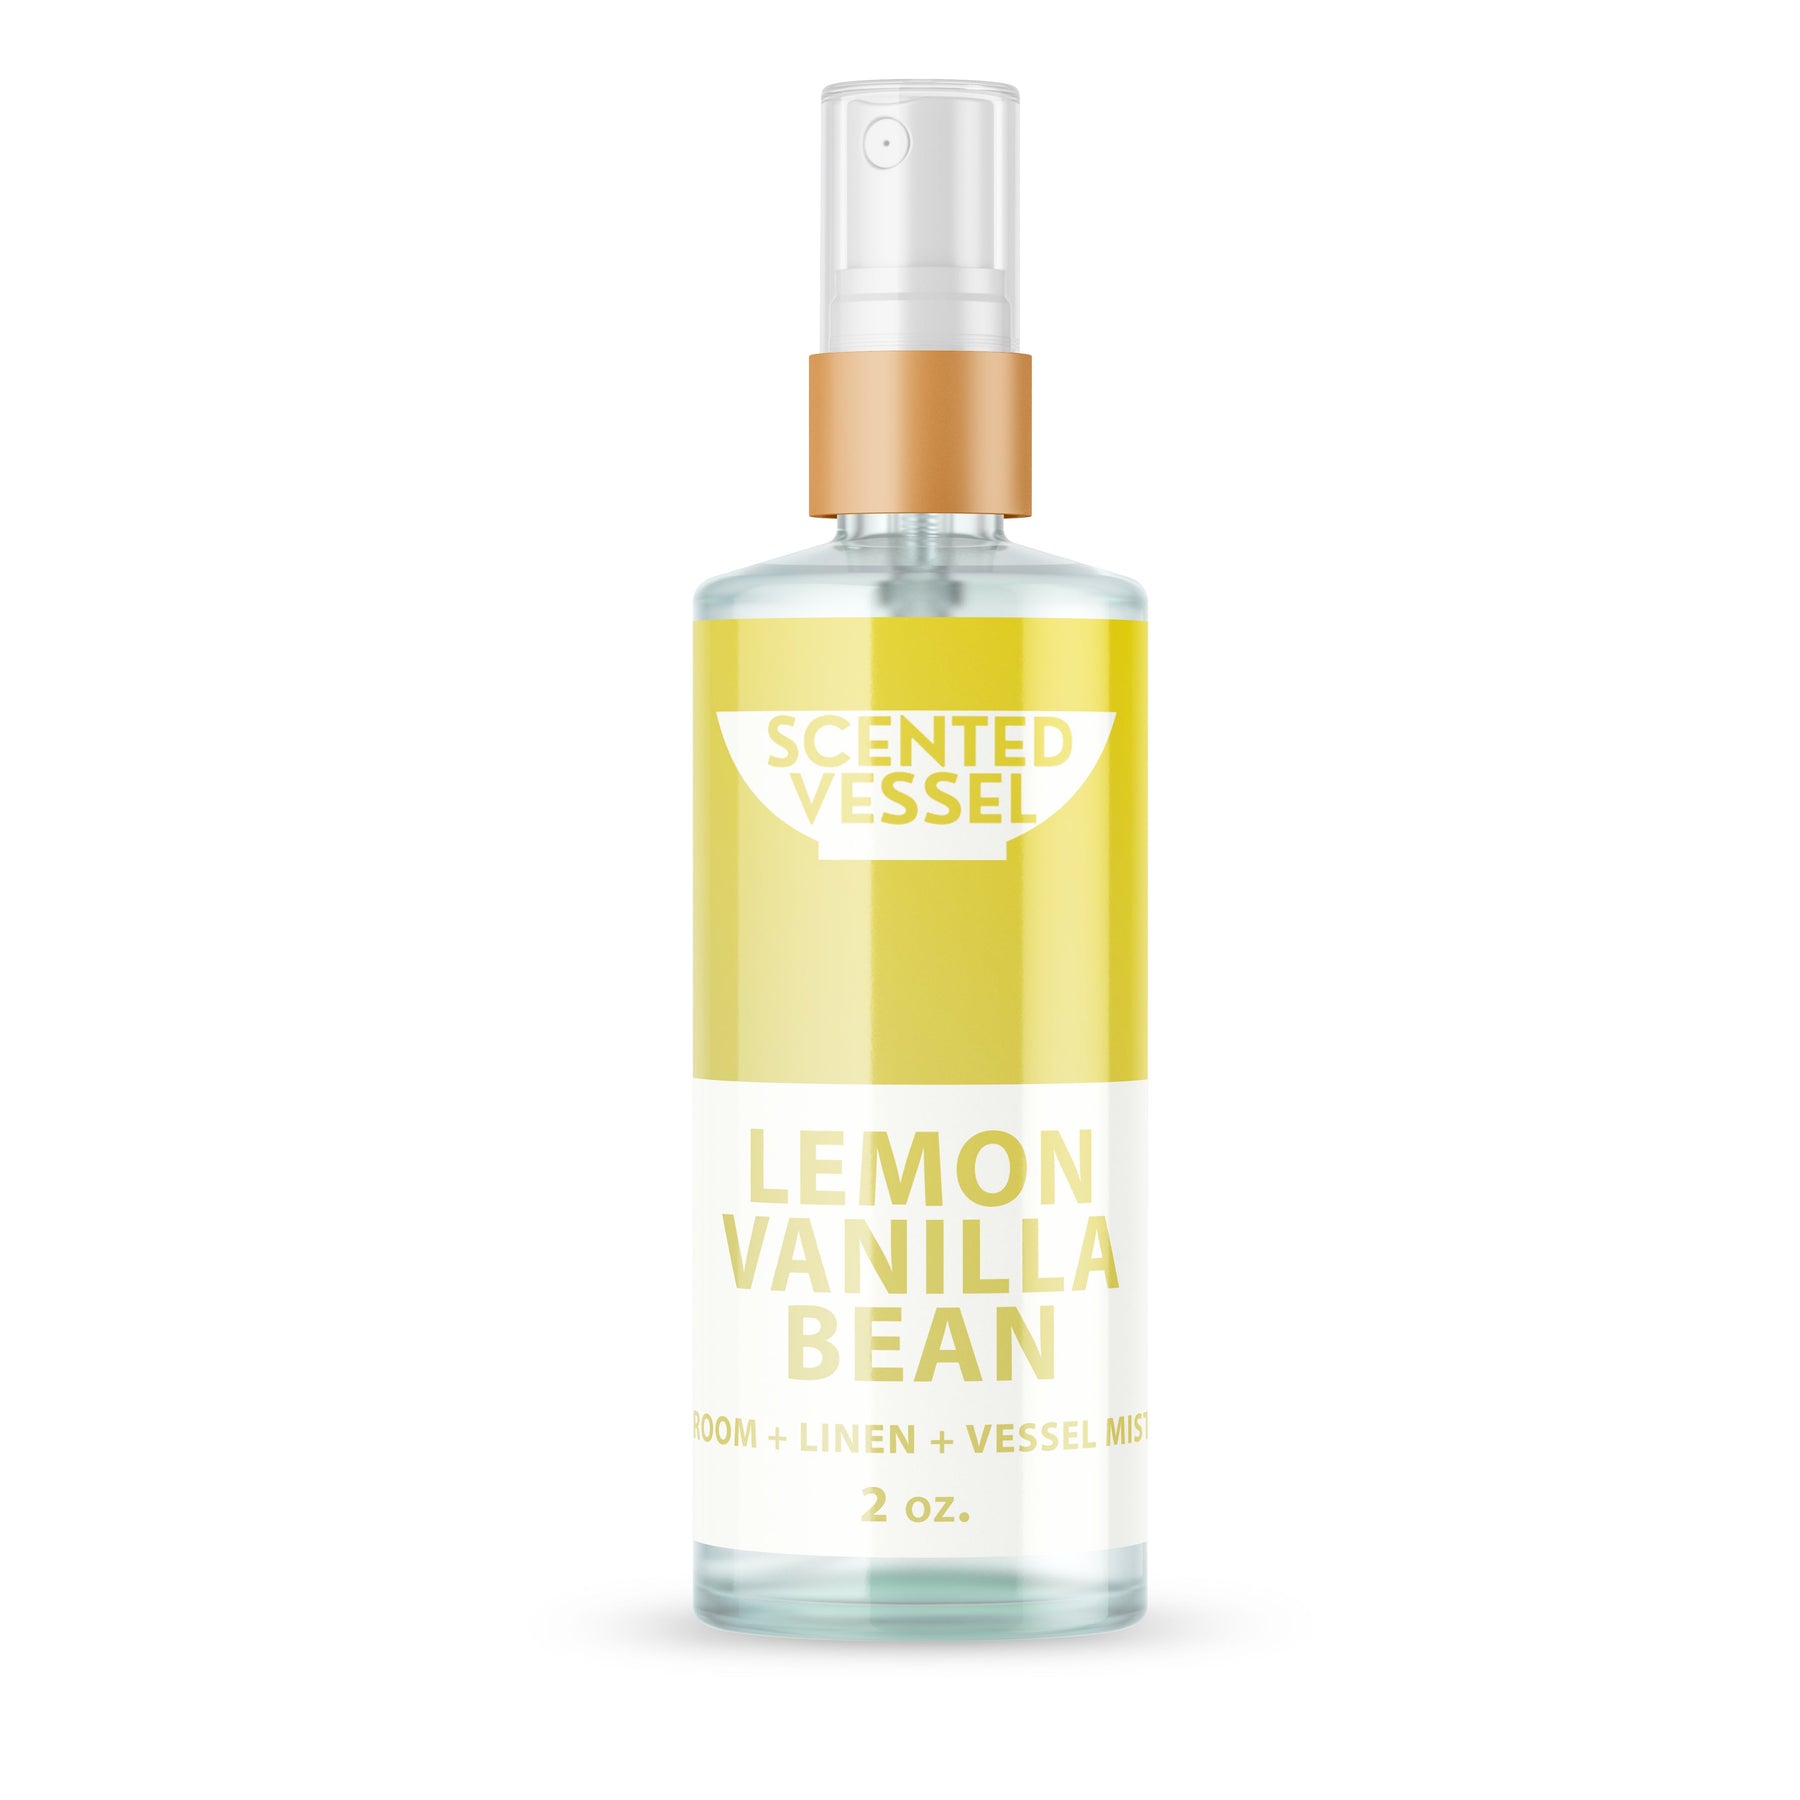 Lemon Vanilla Bean 2oz Fragrance Mist by Scented Vessel